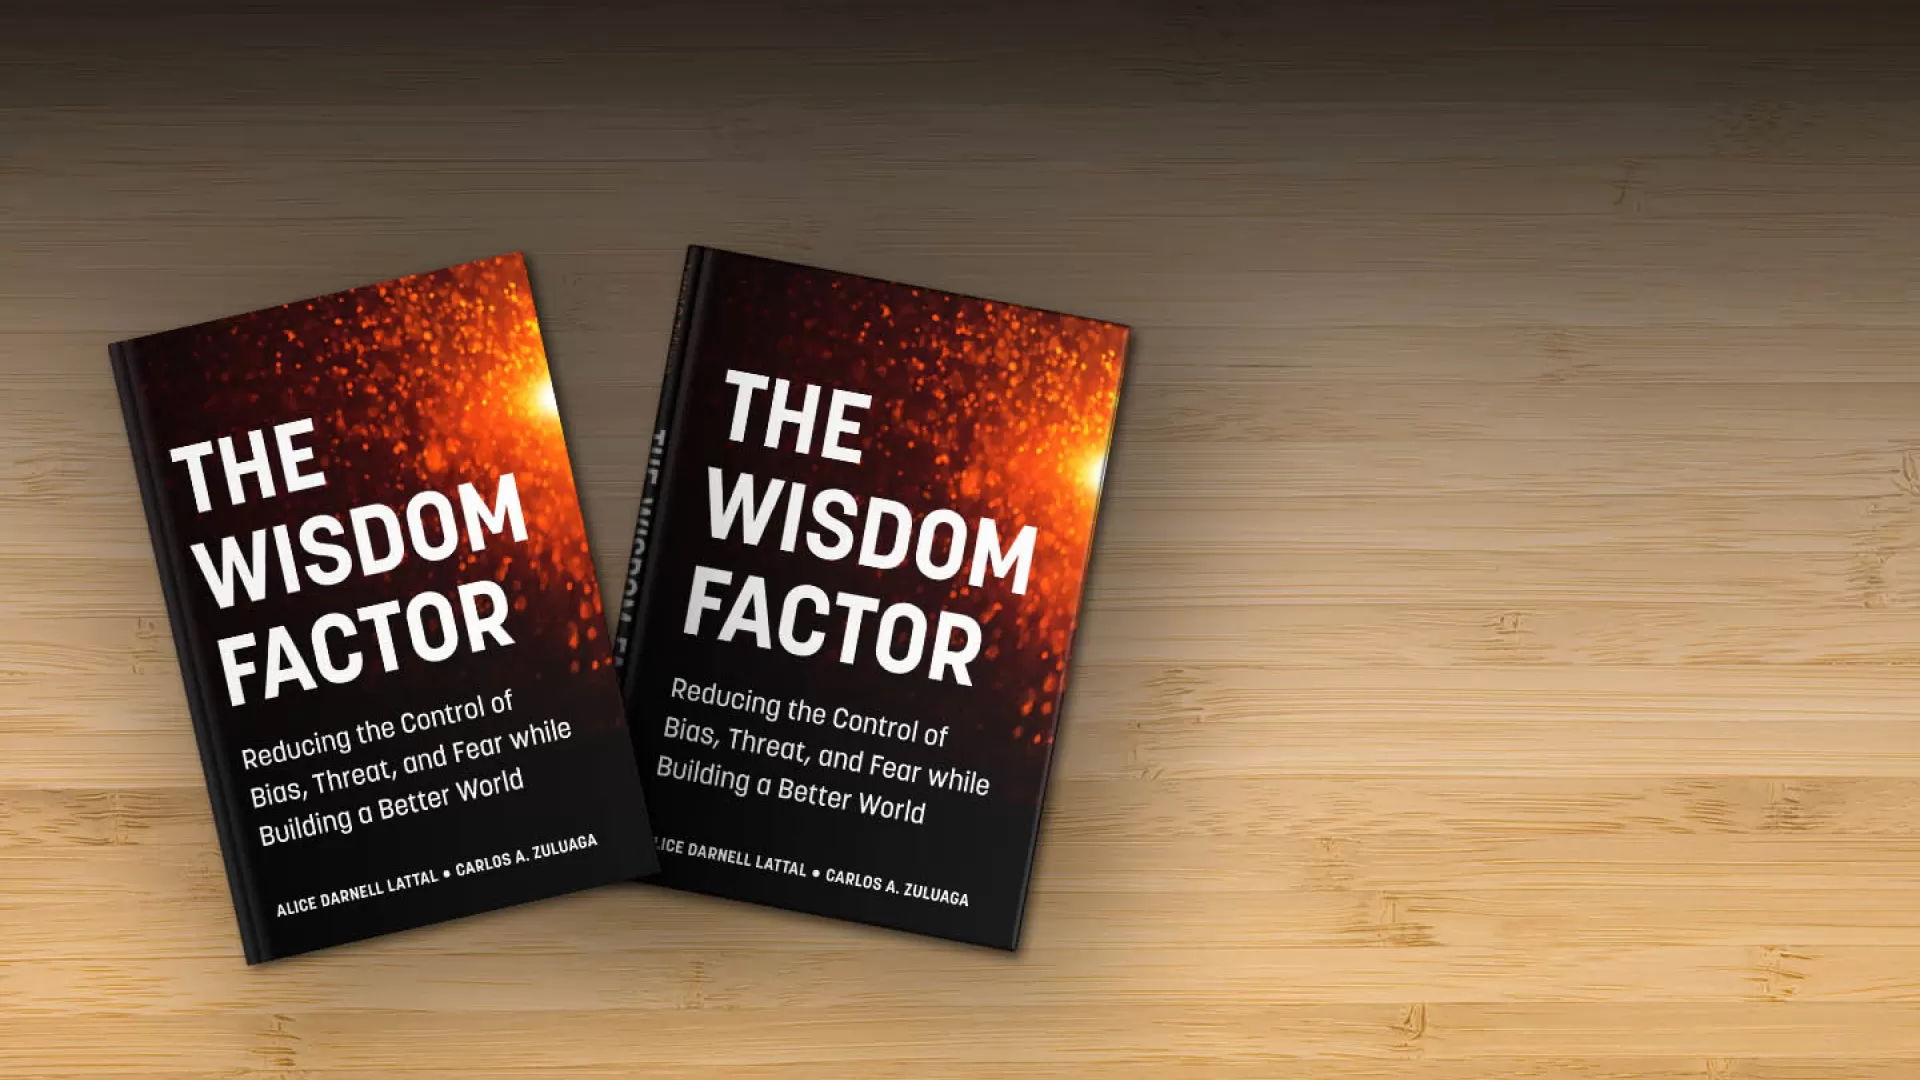 The wisdom factor header